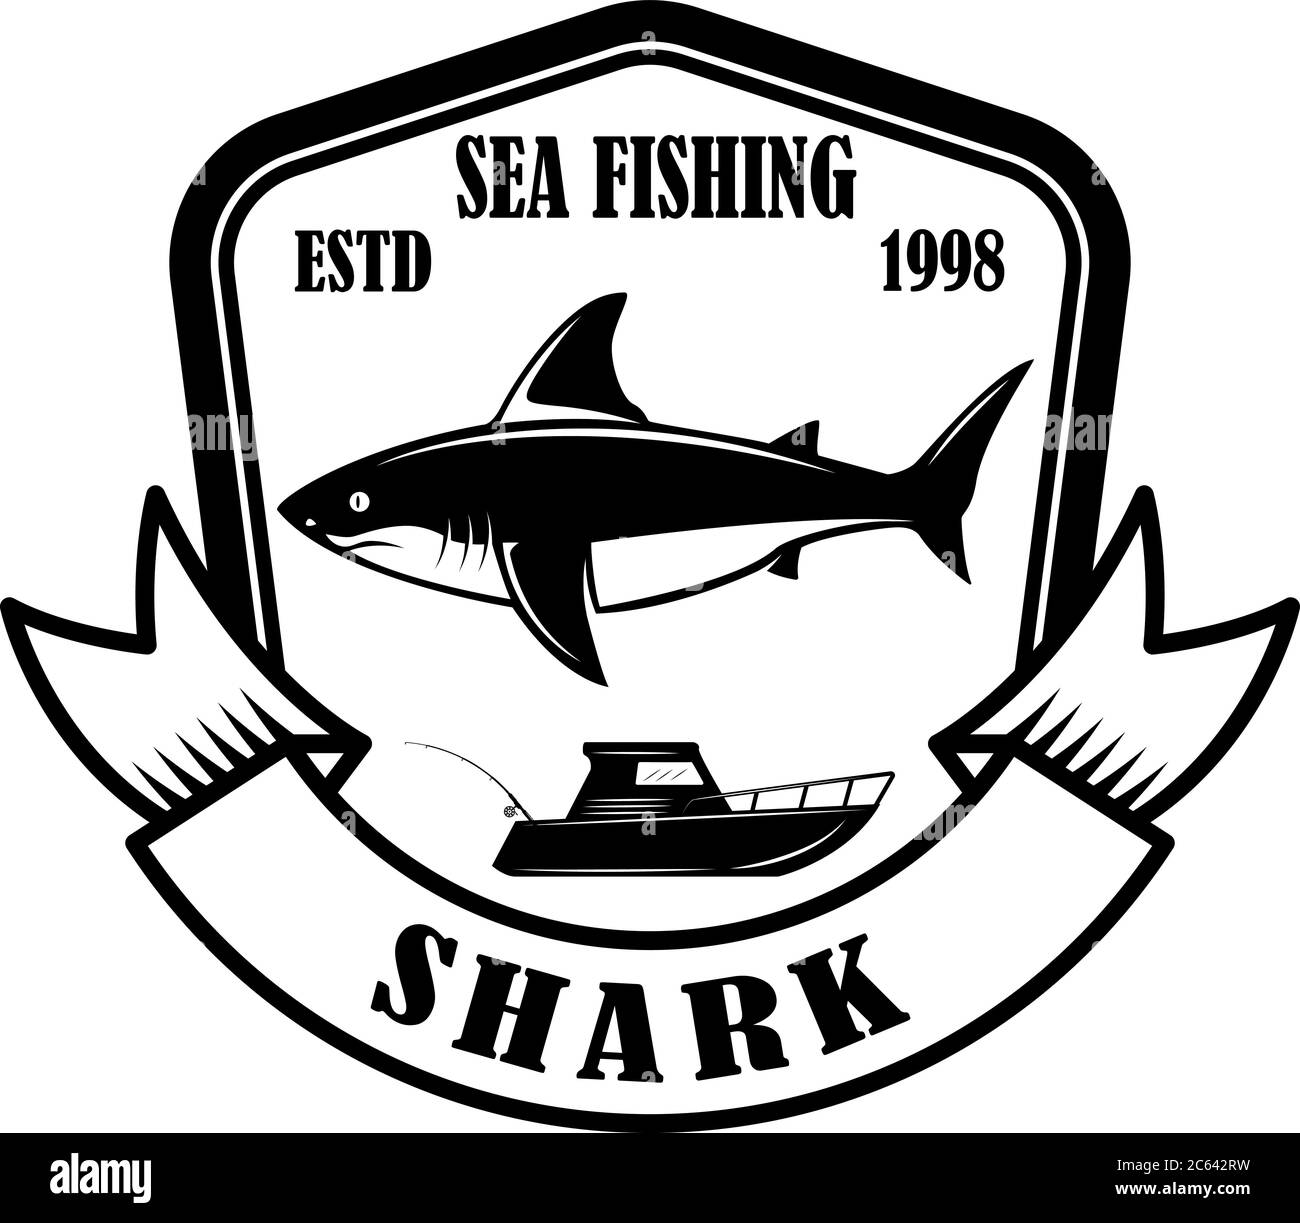 Shark fishing Black and White Stock Photos & Images - Alamy